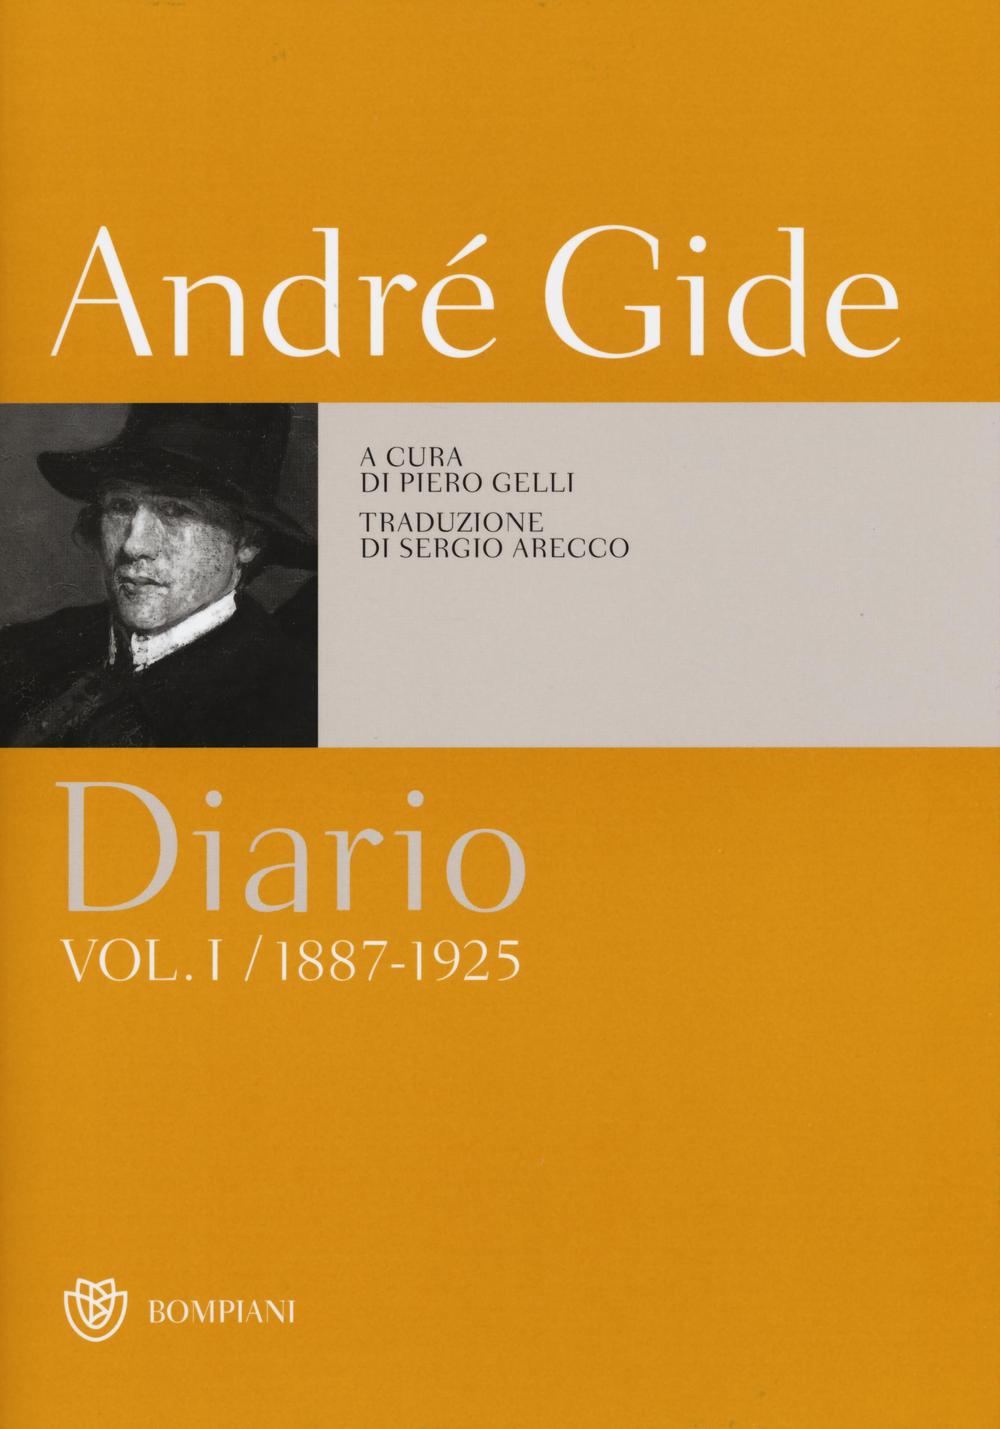 Kniha Diario André Gide